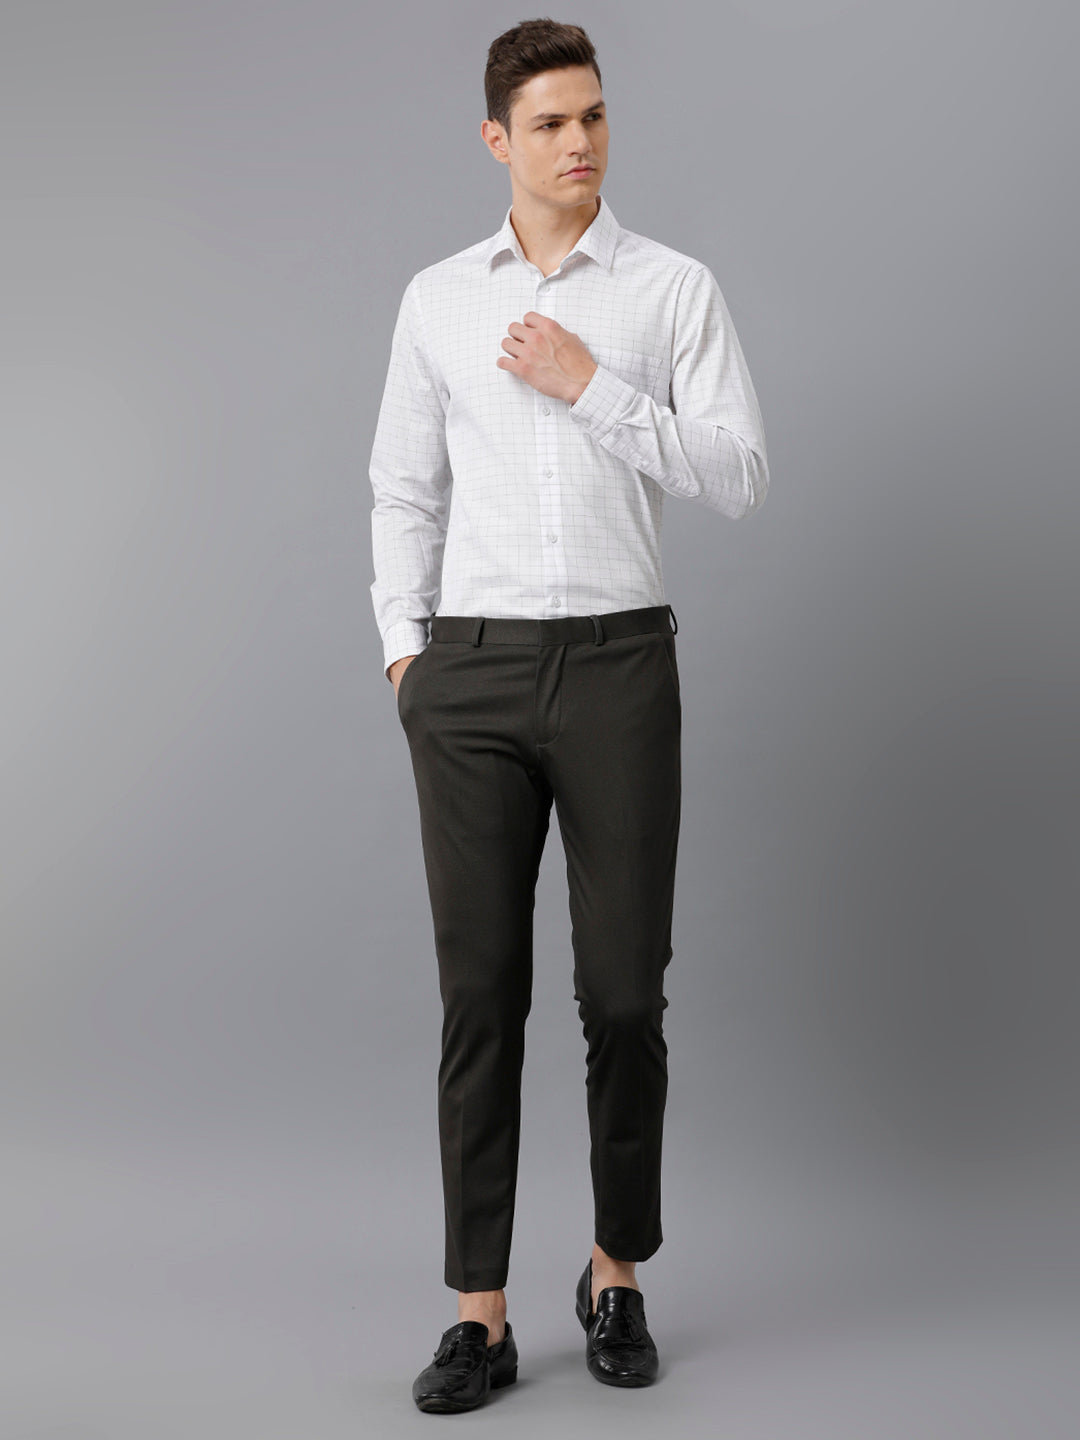 Aldeno Mens Slim Fit White/Olive Green Check Formal Cotton Shirt (FOCEK)